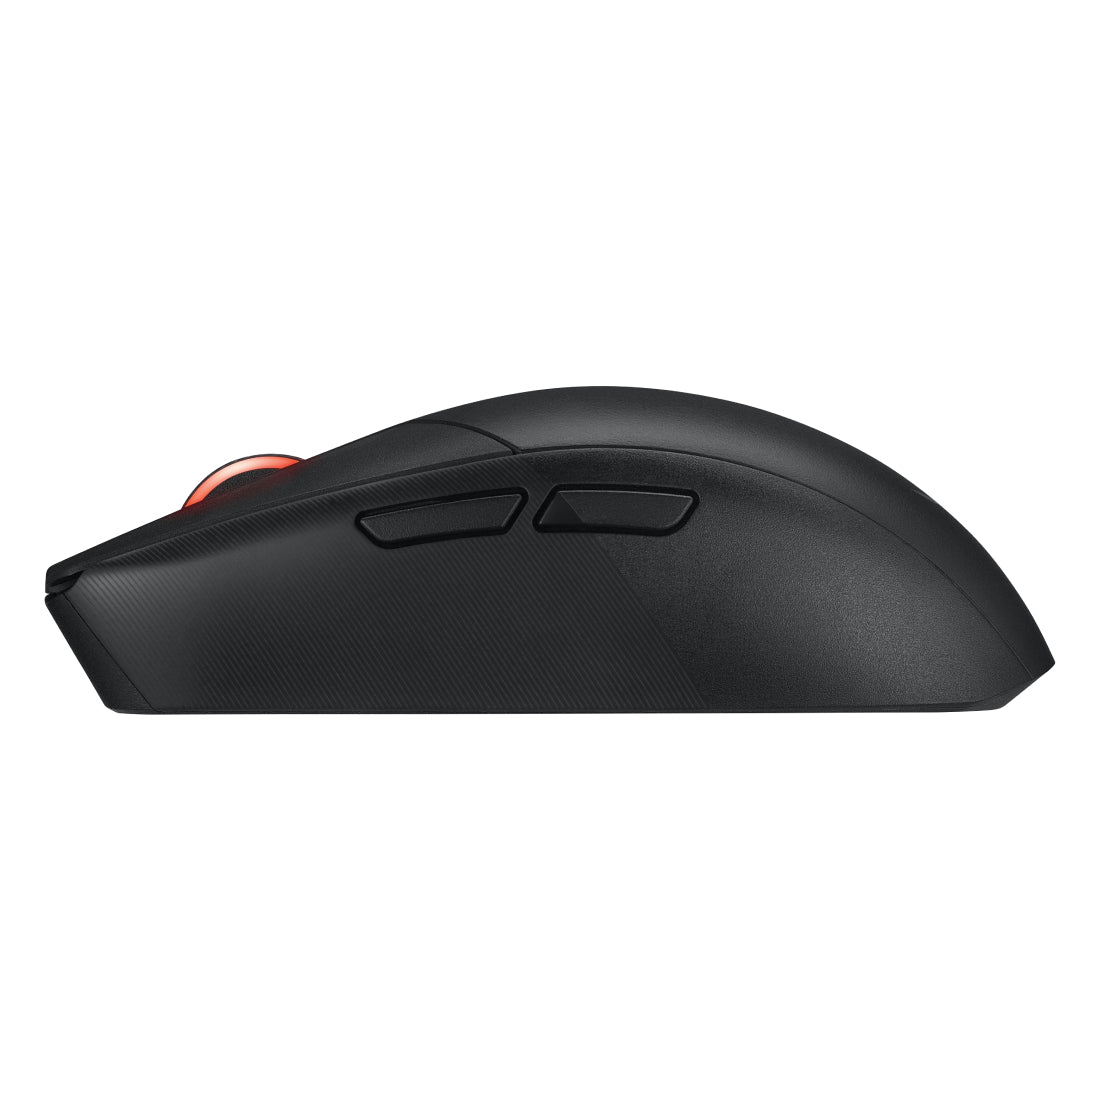 Asus ROG Strix Impact III Wireless Gaming Mouse - Black - فأرة